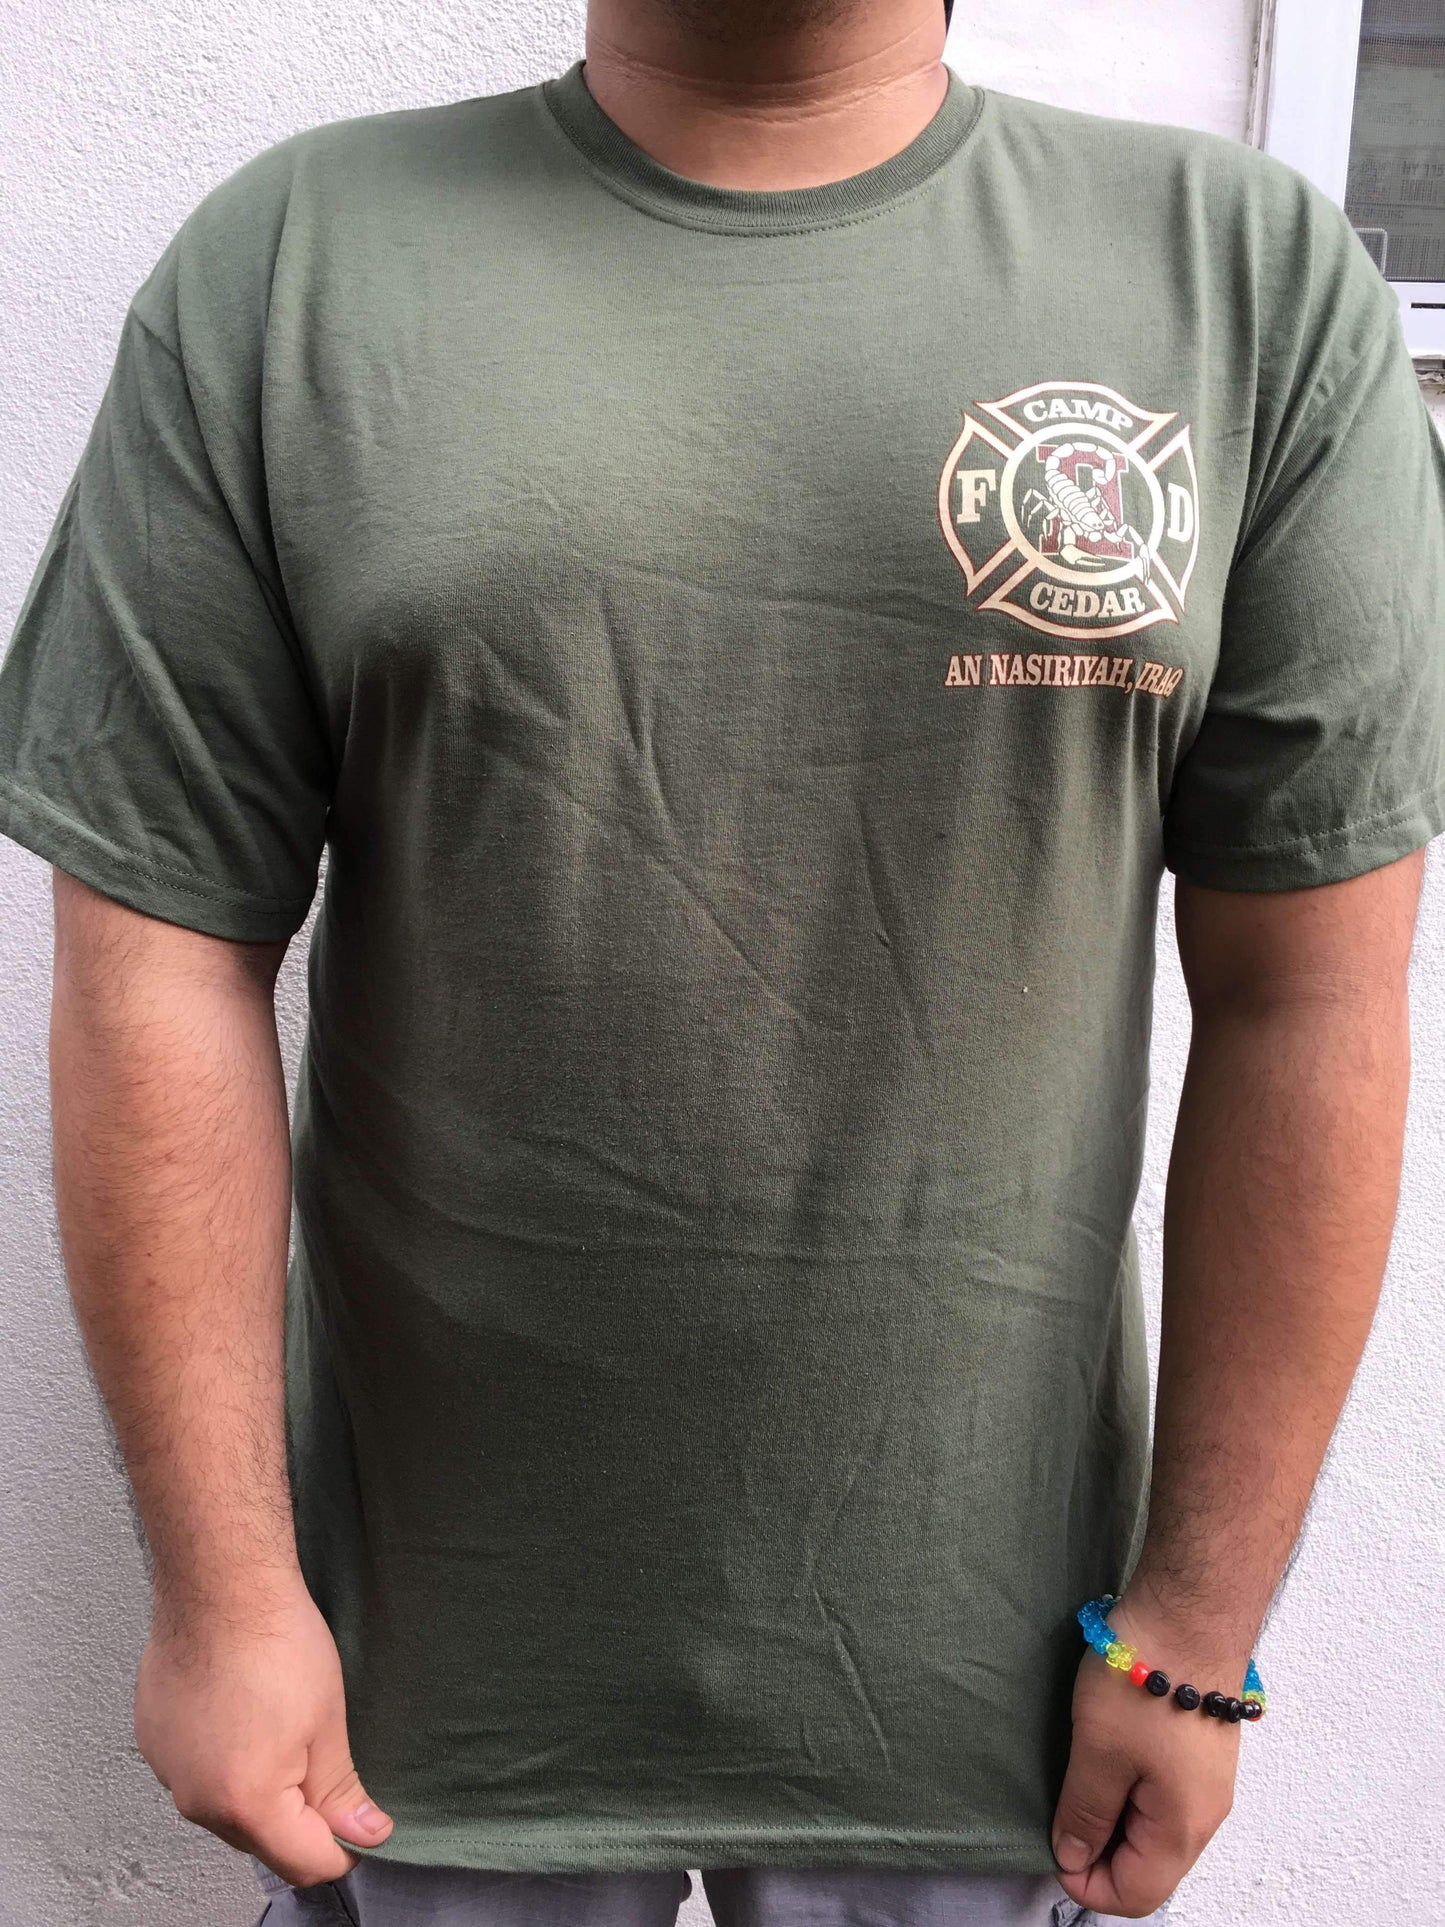  Camp Cedar Fire Department Printed ShirtFire Department Clothing